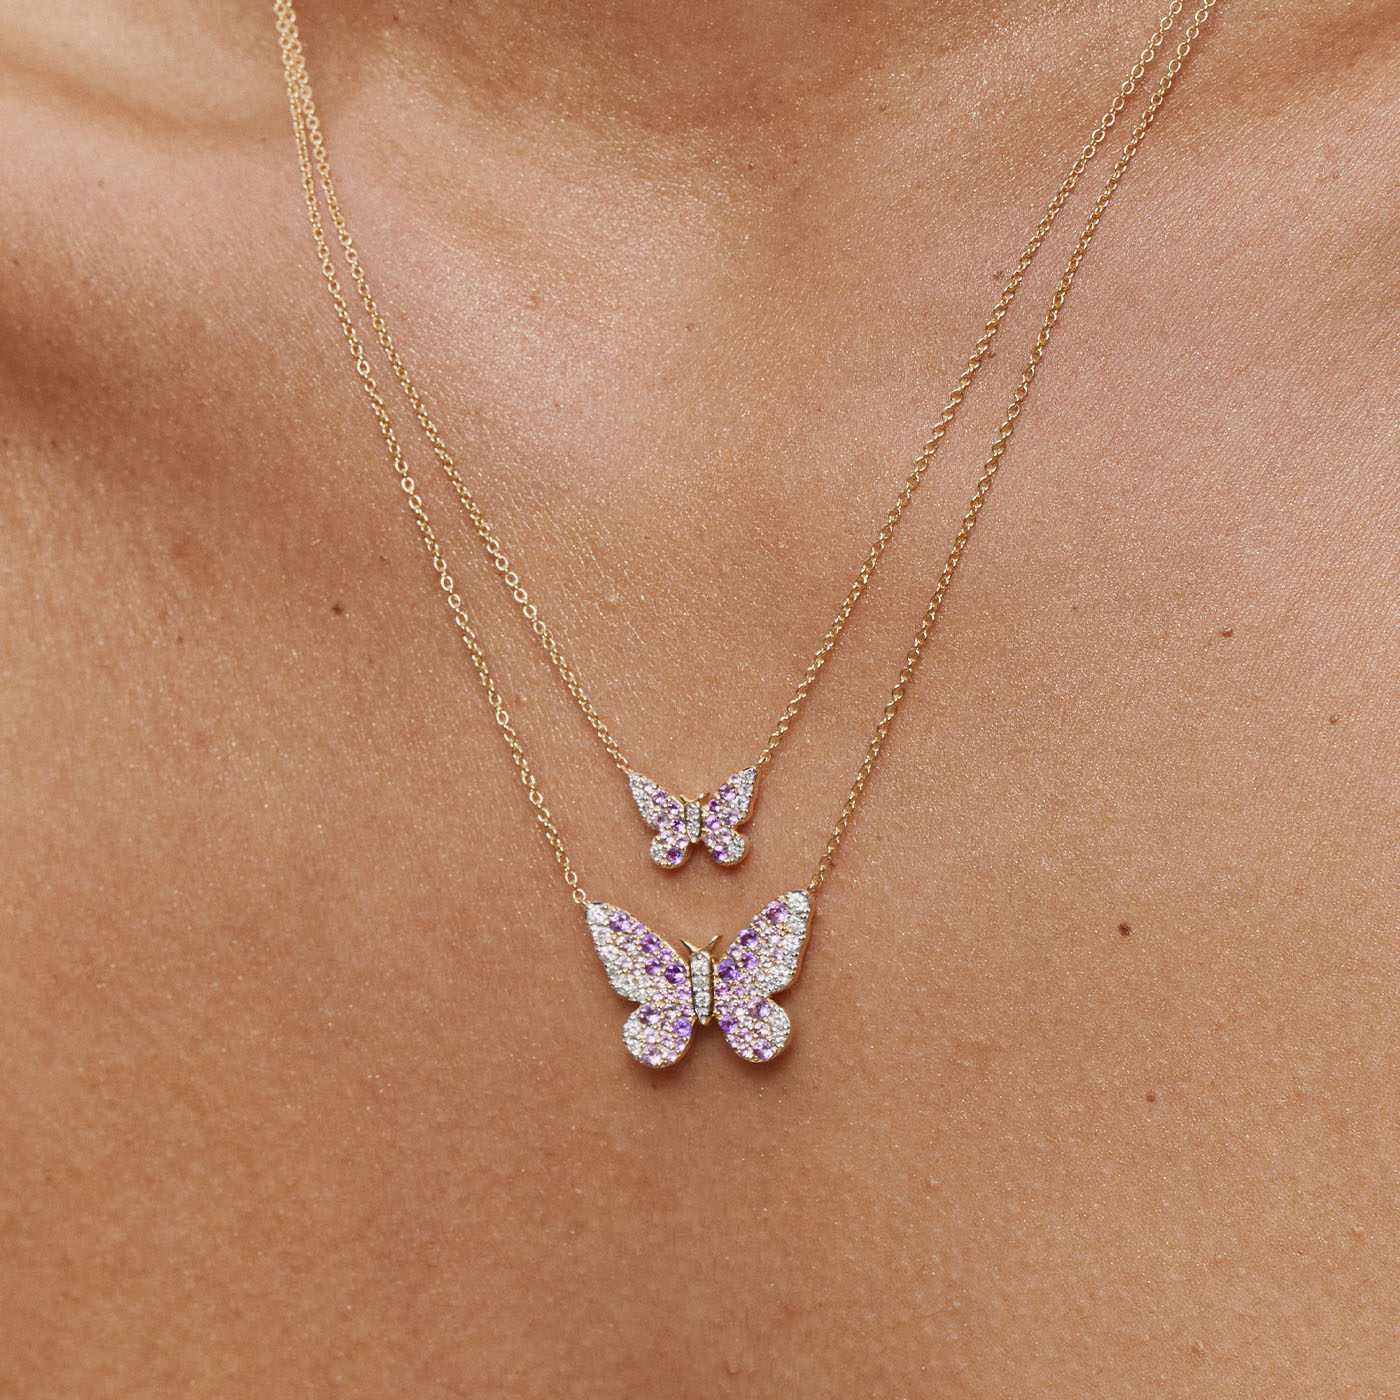 Best Friends Celestial Butterfly Pendant Necklaces - 2 Pack | Claire's US